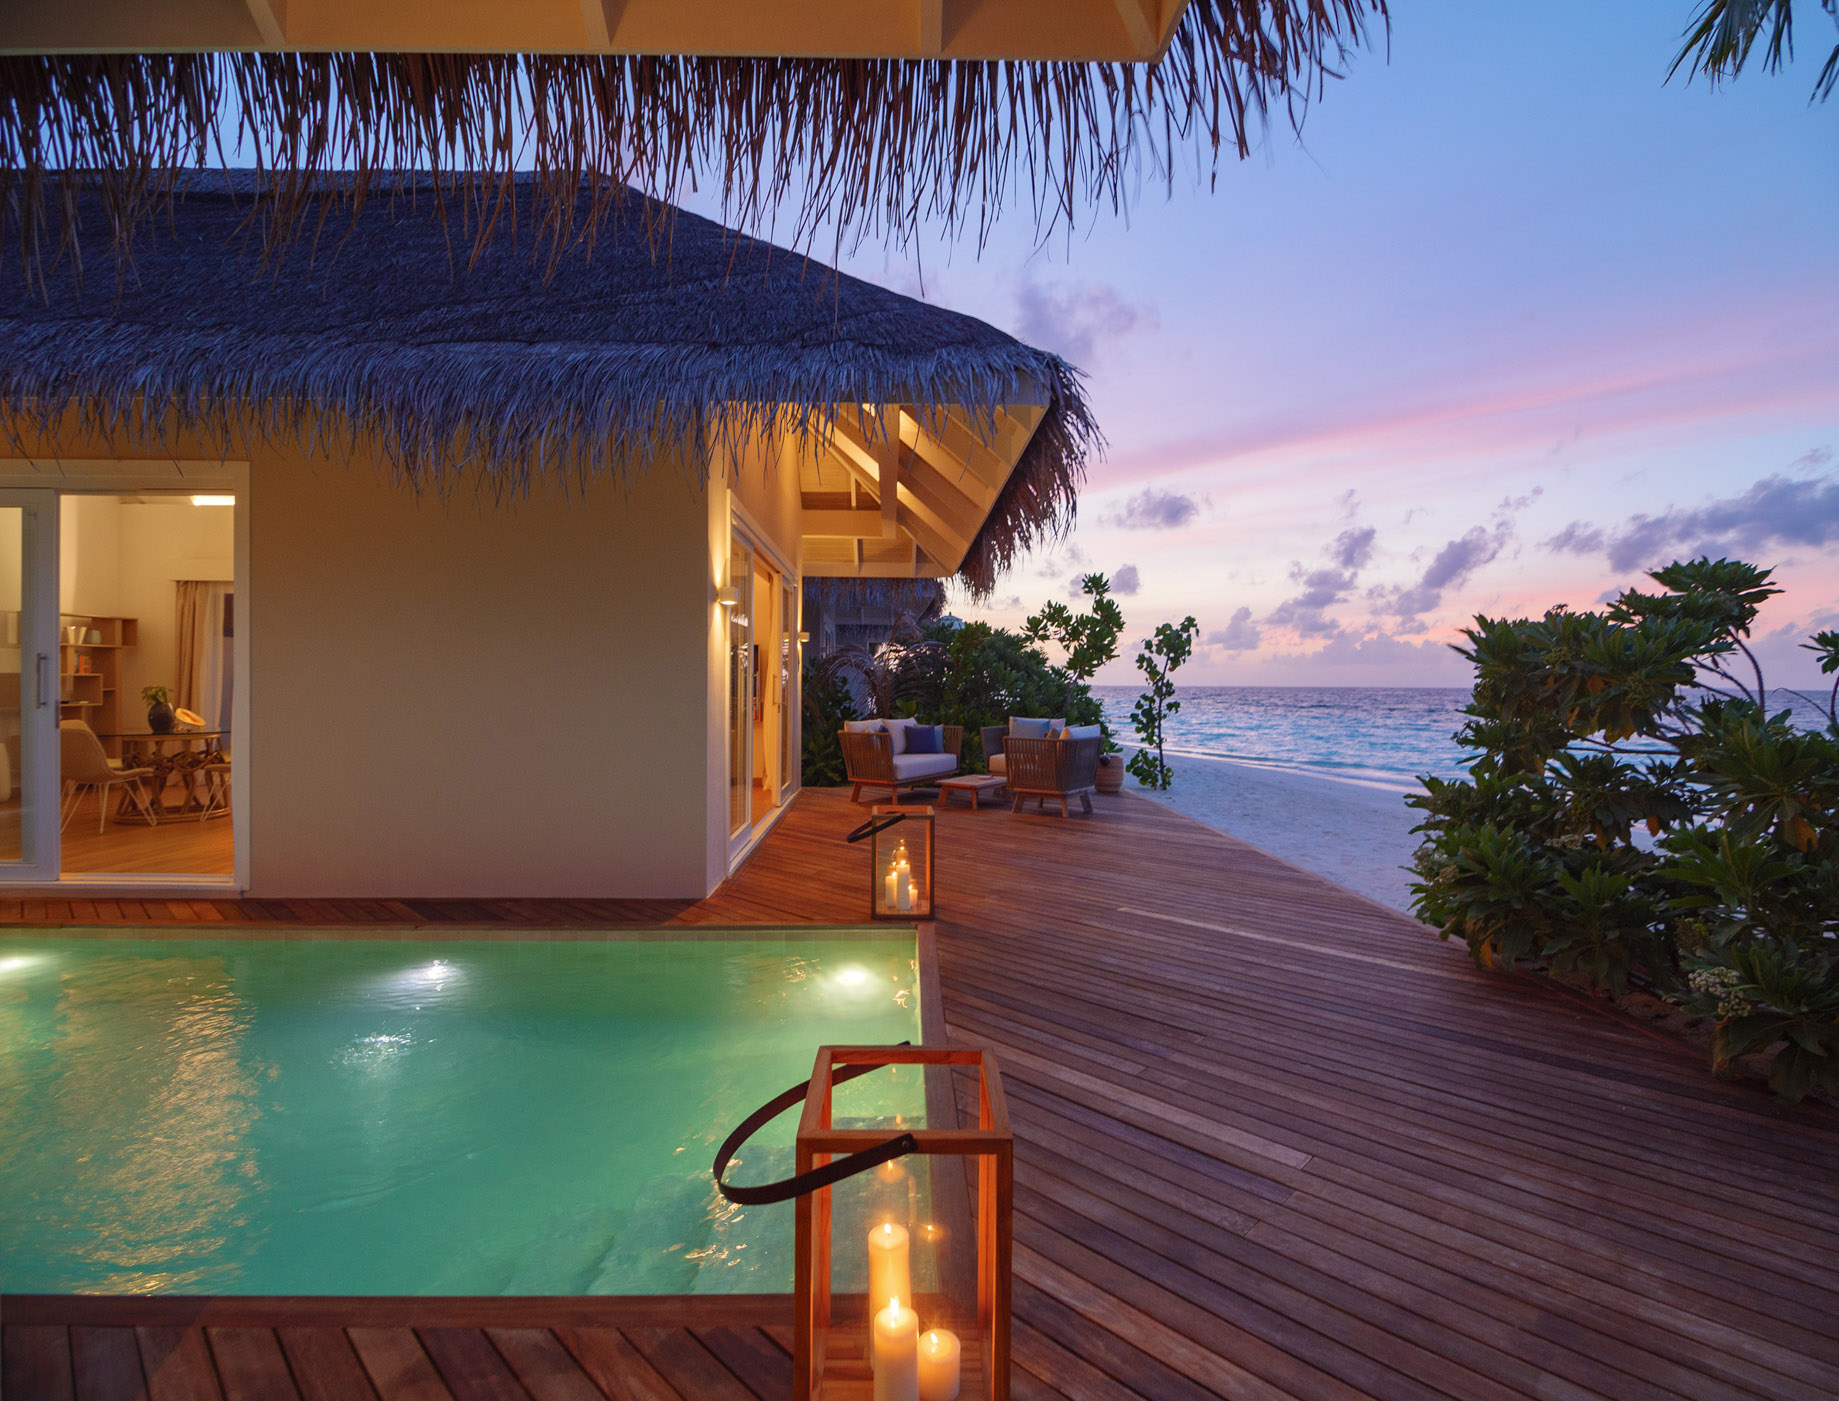 Baglioni Resort Maldives – Maagau Island, Rinbudhoo, Maldives – Beach Villa Ocean View Sunset